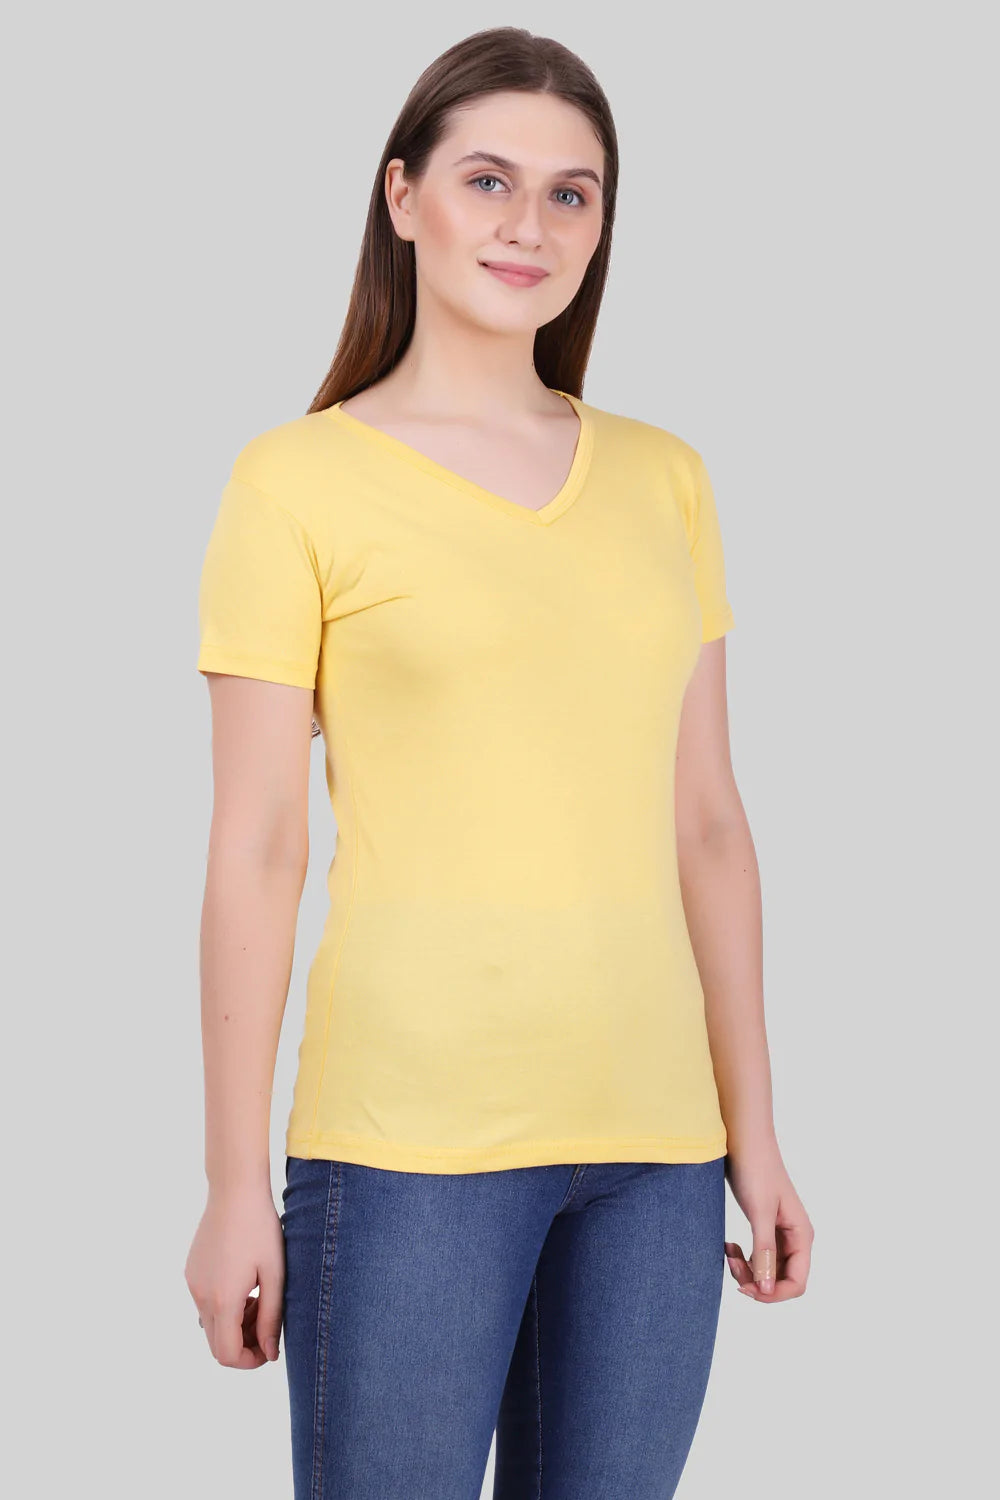 Women's Cotton Plain V Neck Half Sleeve Yellow Color T-Shirt